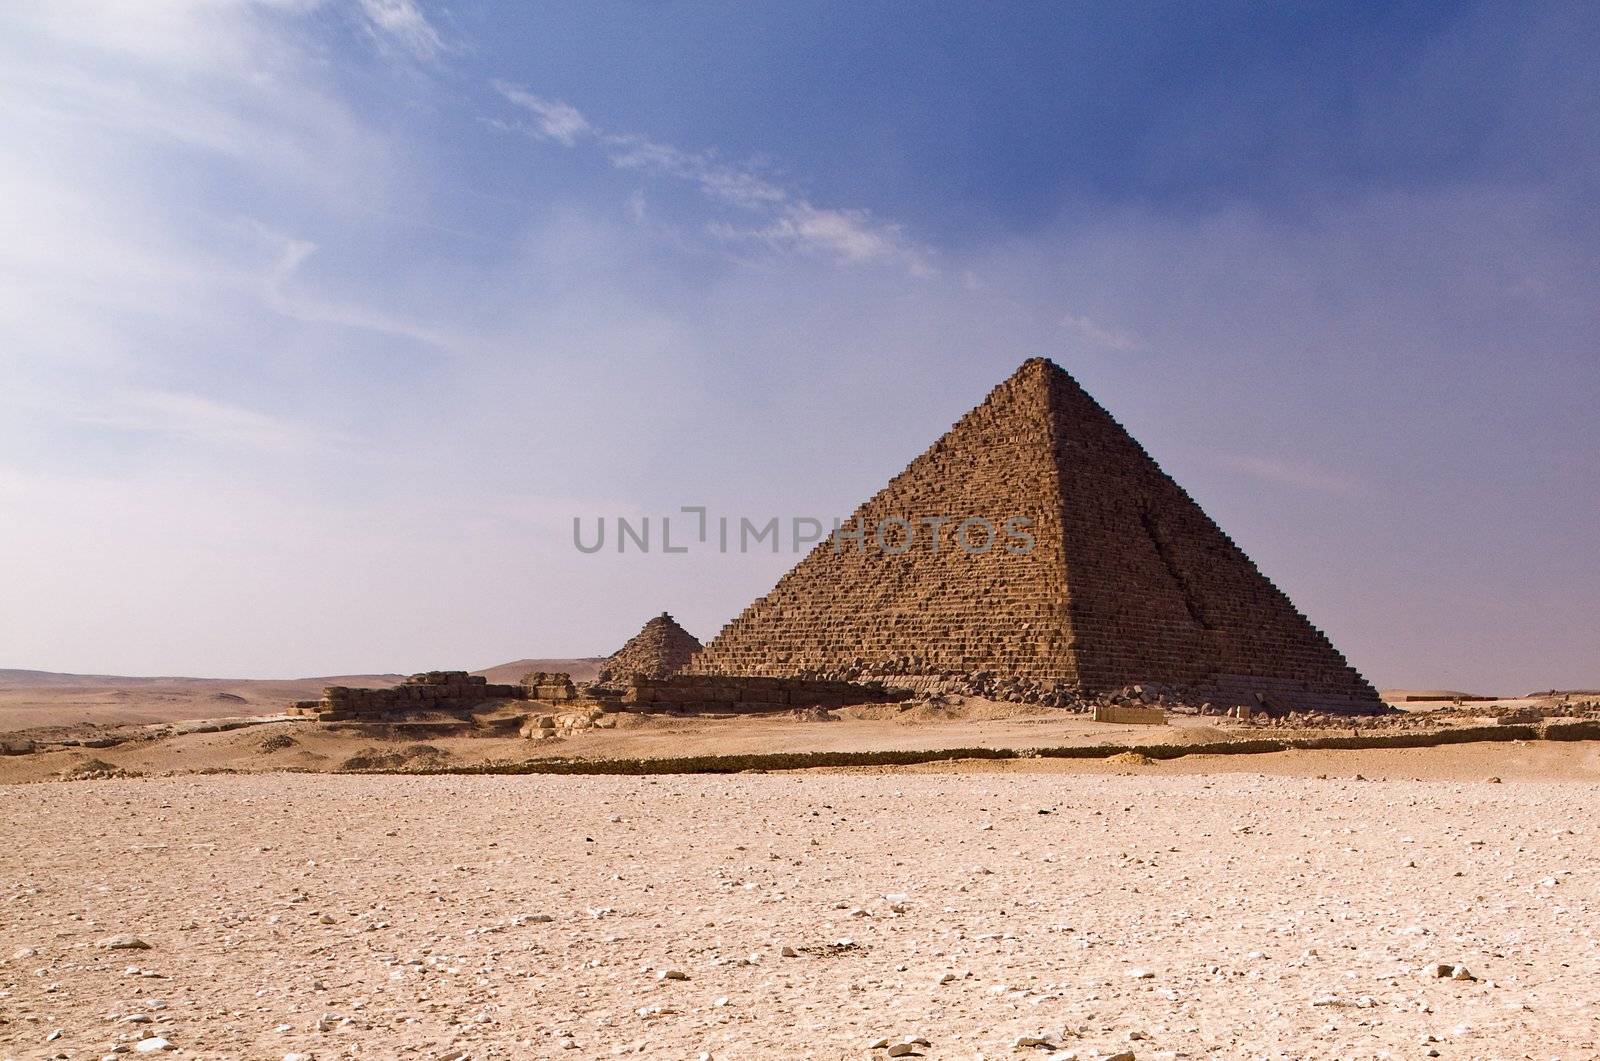 Pyramid in the desert by Gbuglok